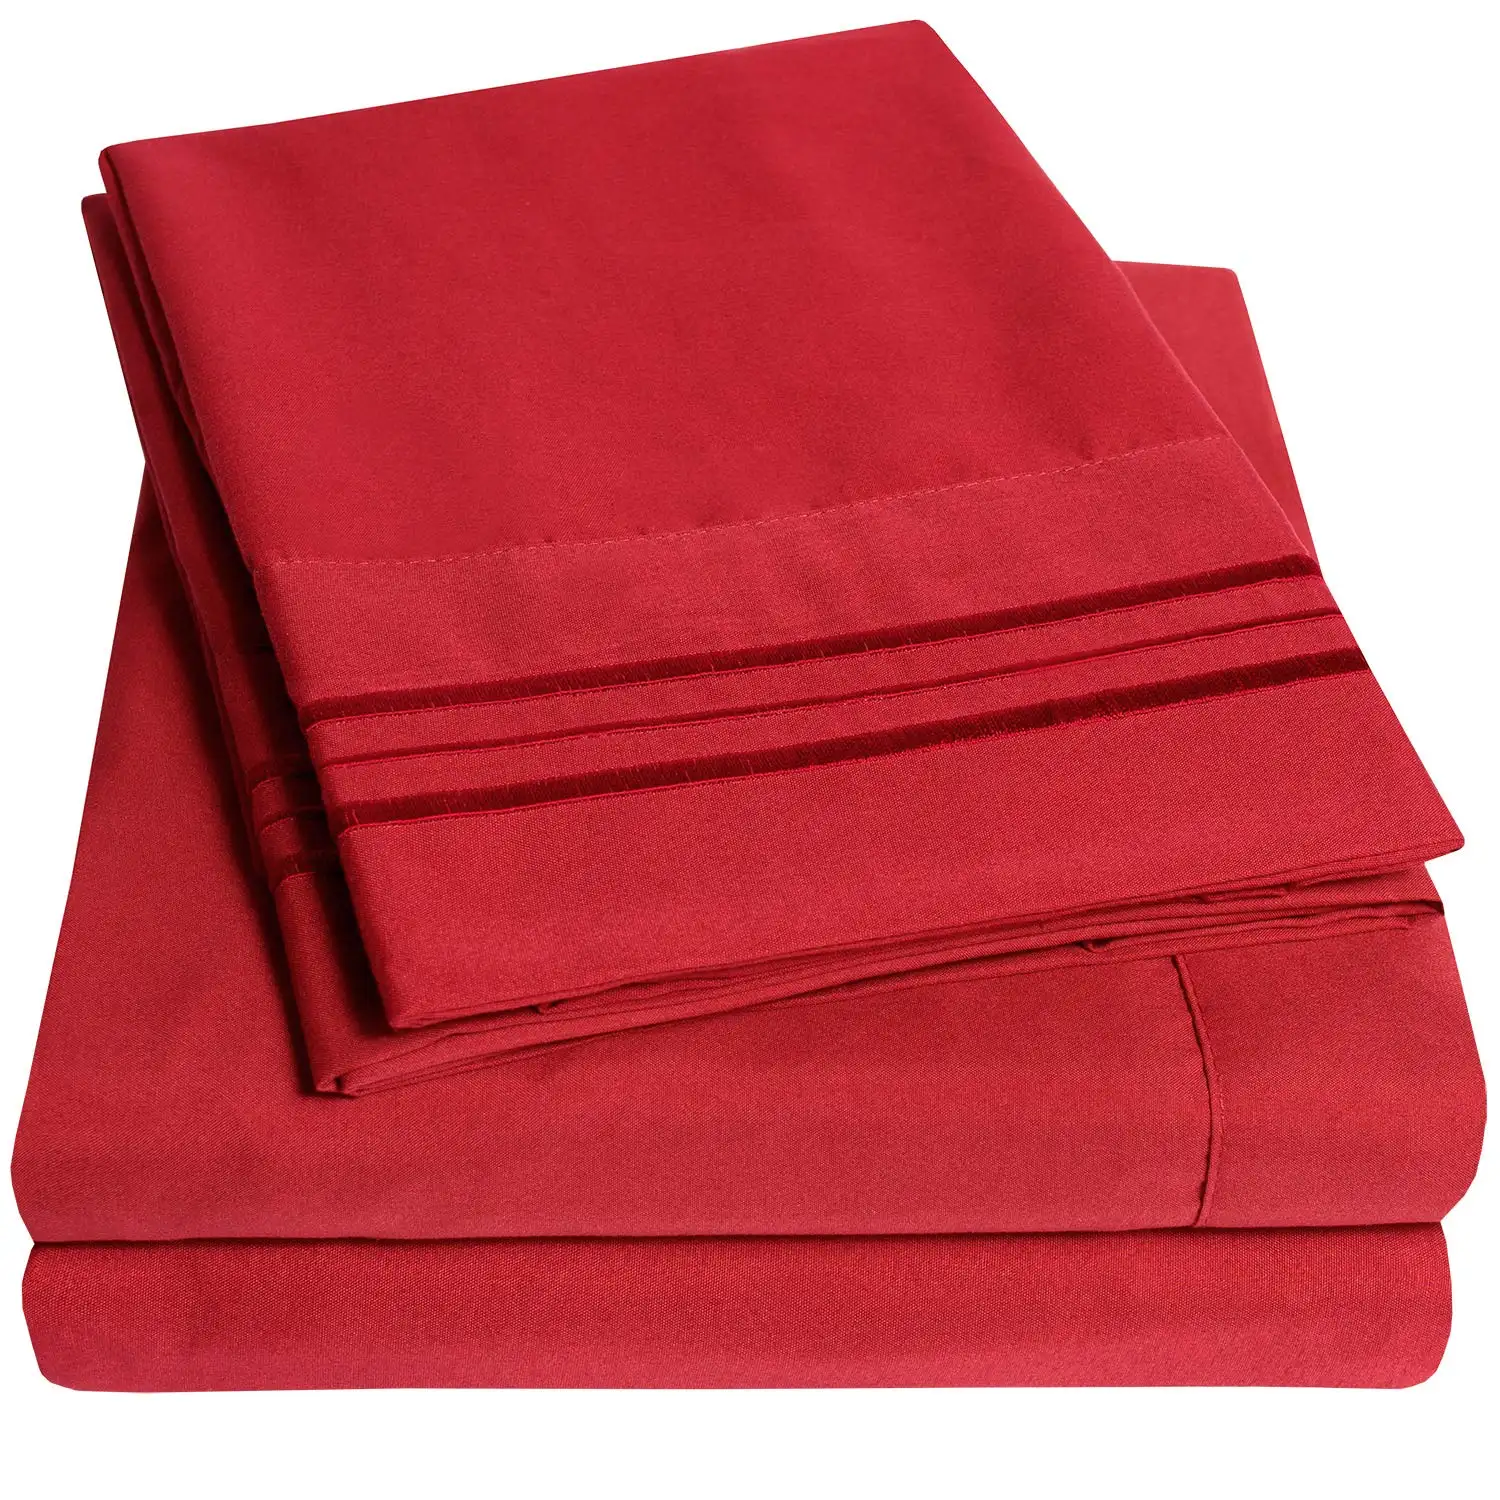 Home Bedding 100% Polyester Brushed Microfiber Solid Color Red Bed Flat Sheet Set Fitted Sheet Set